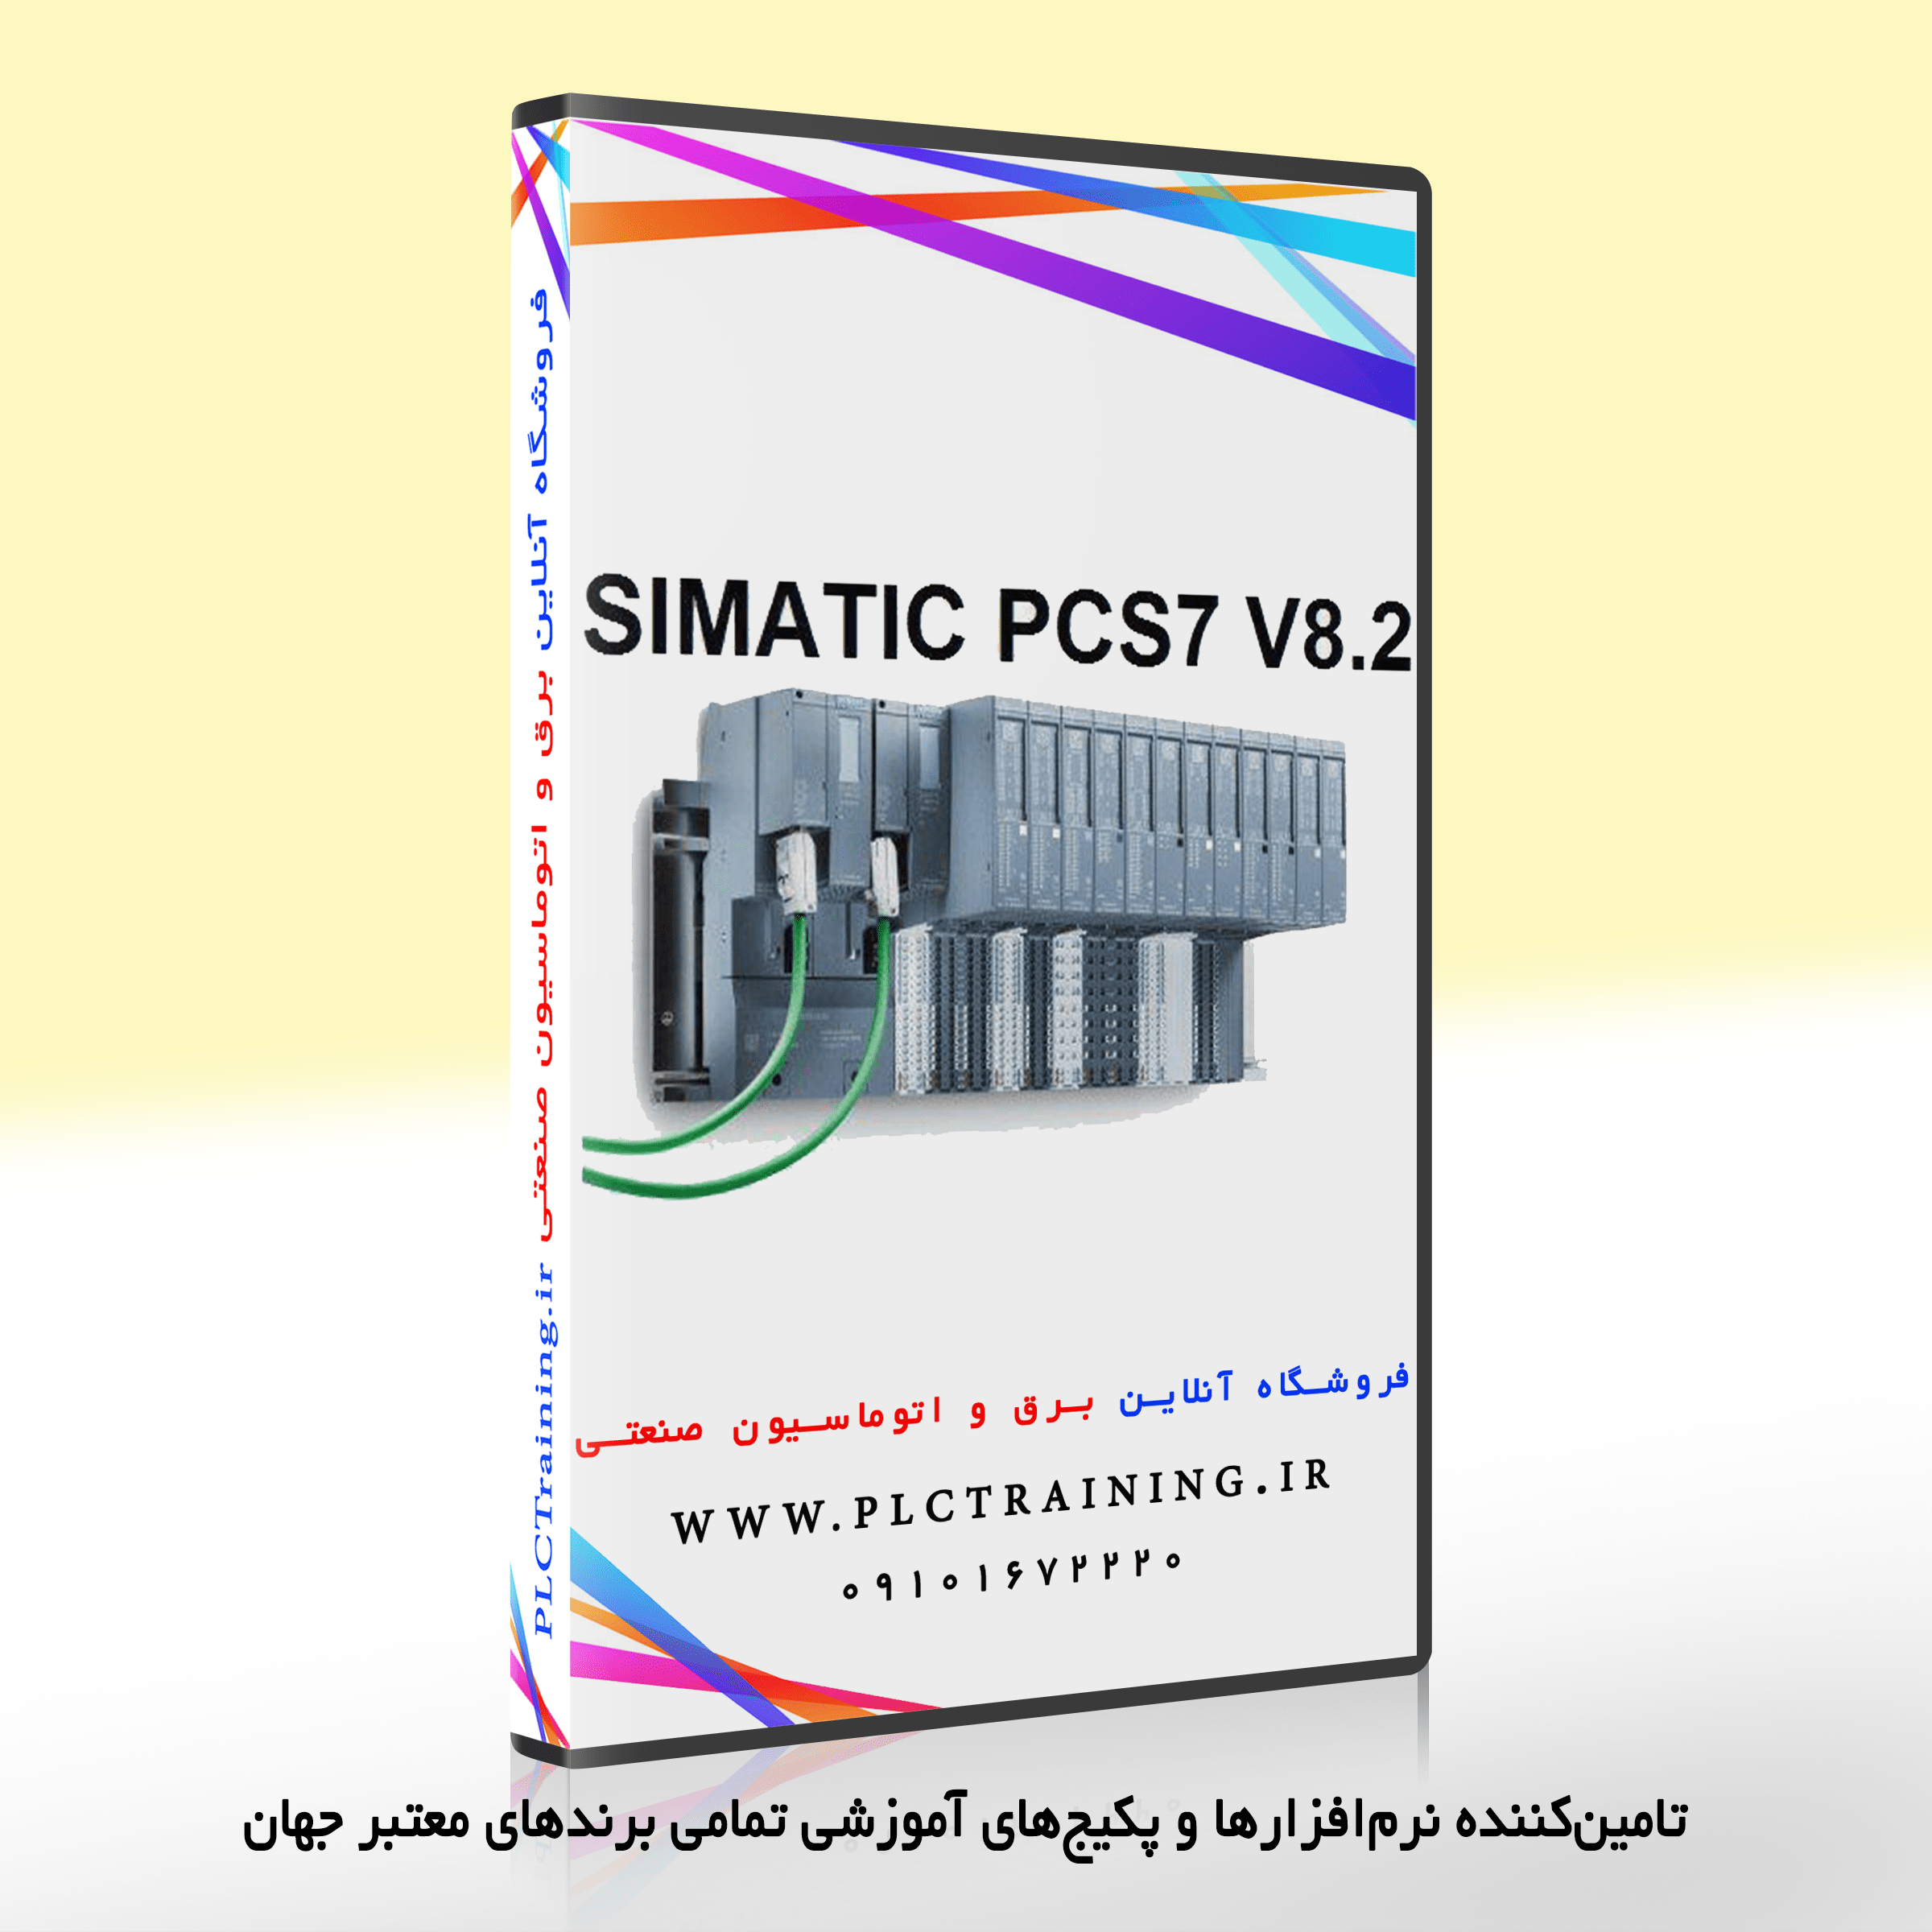 SIMATIC PCS7 v8.2